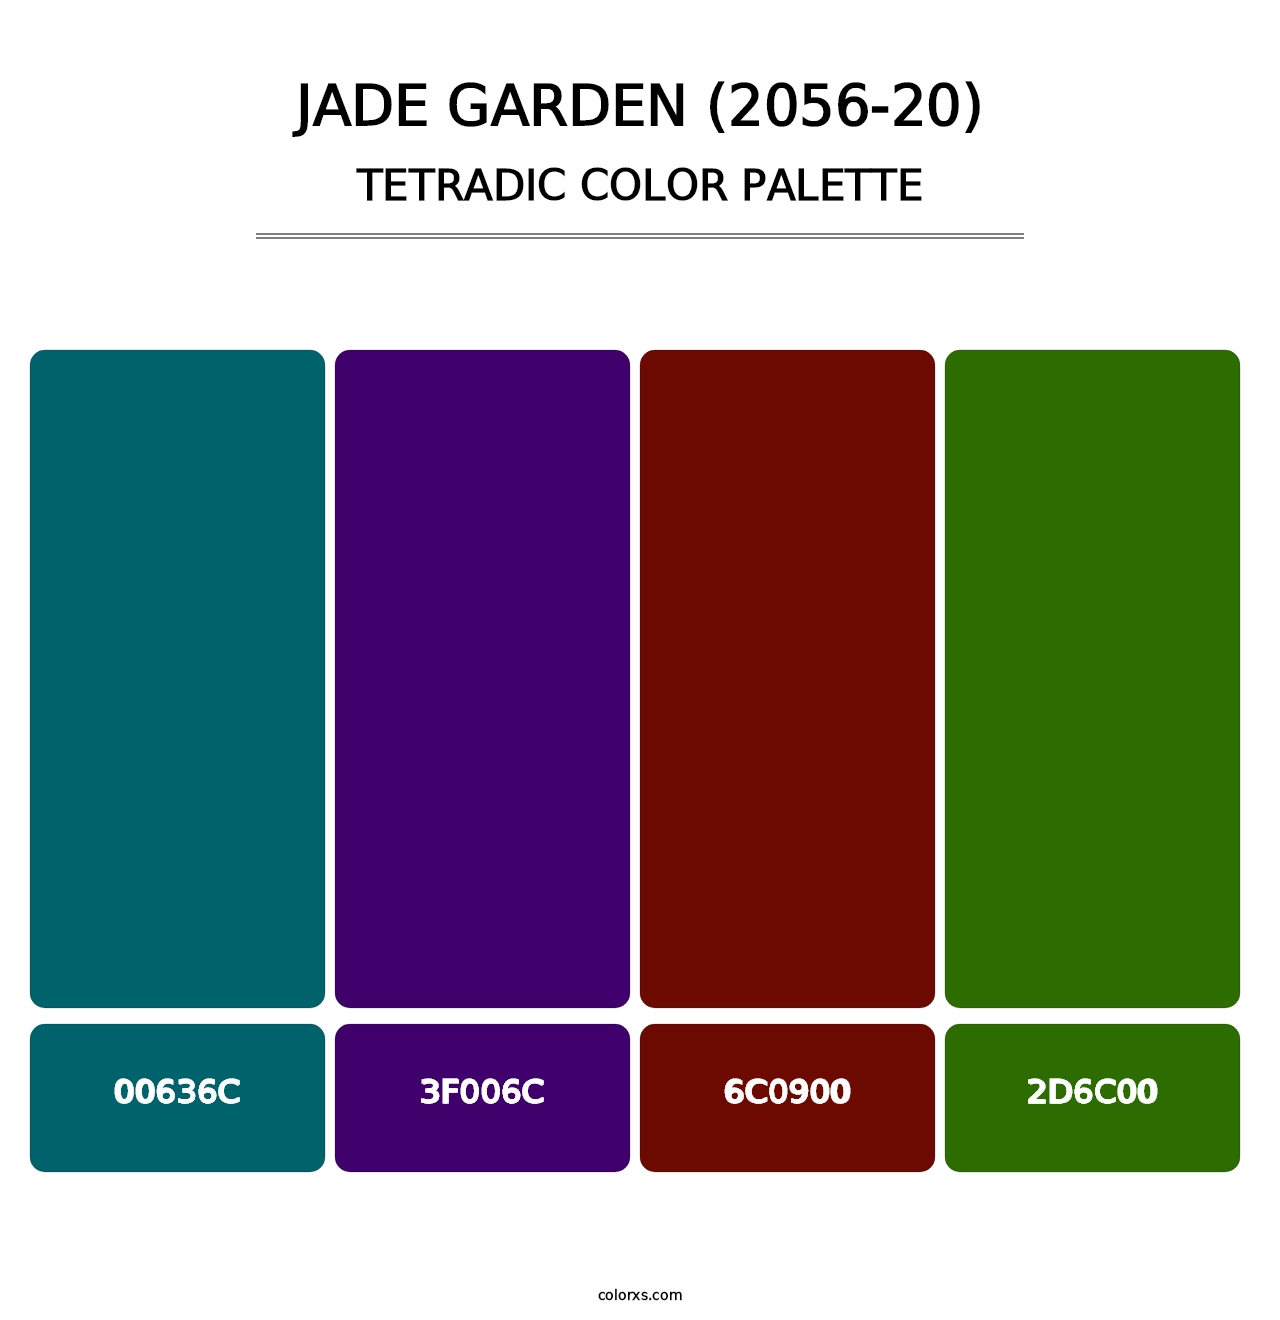 Jade Garden (2056-20) - Tetradic Color Palette